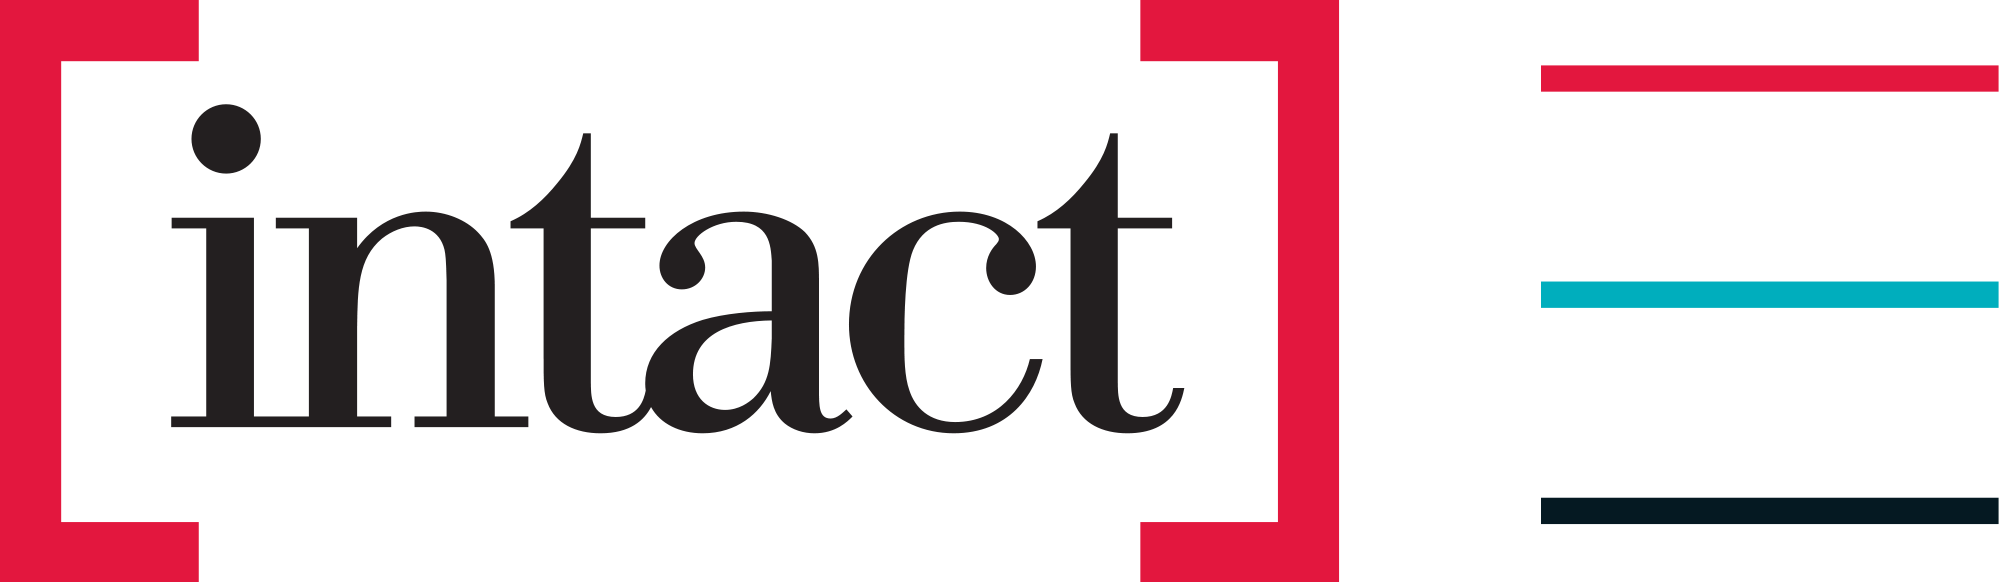 Intact financial logo